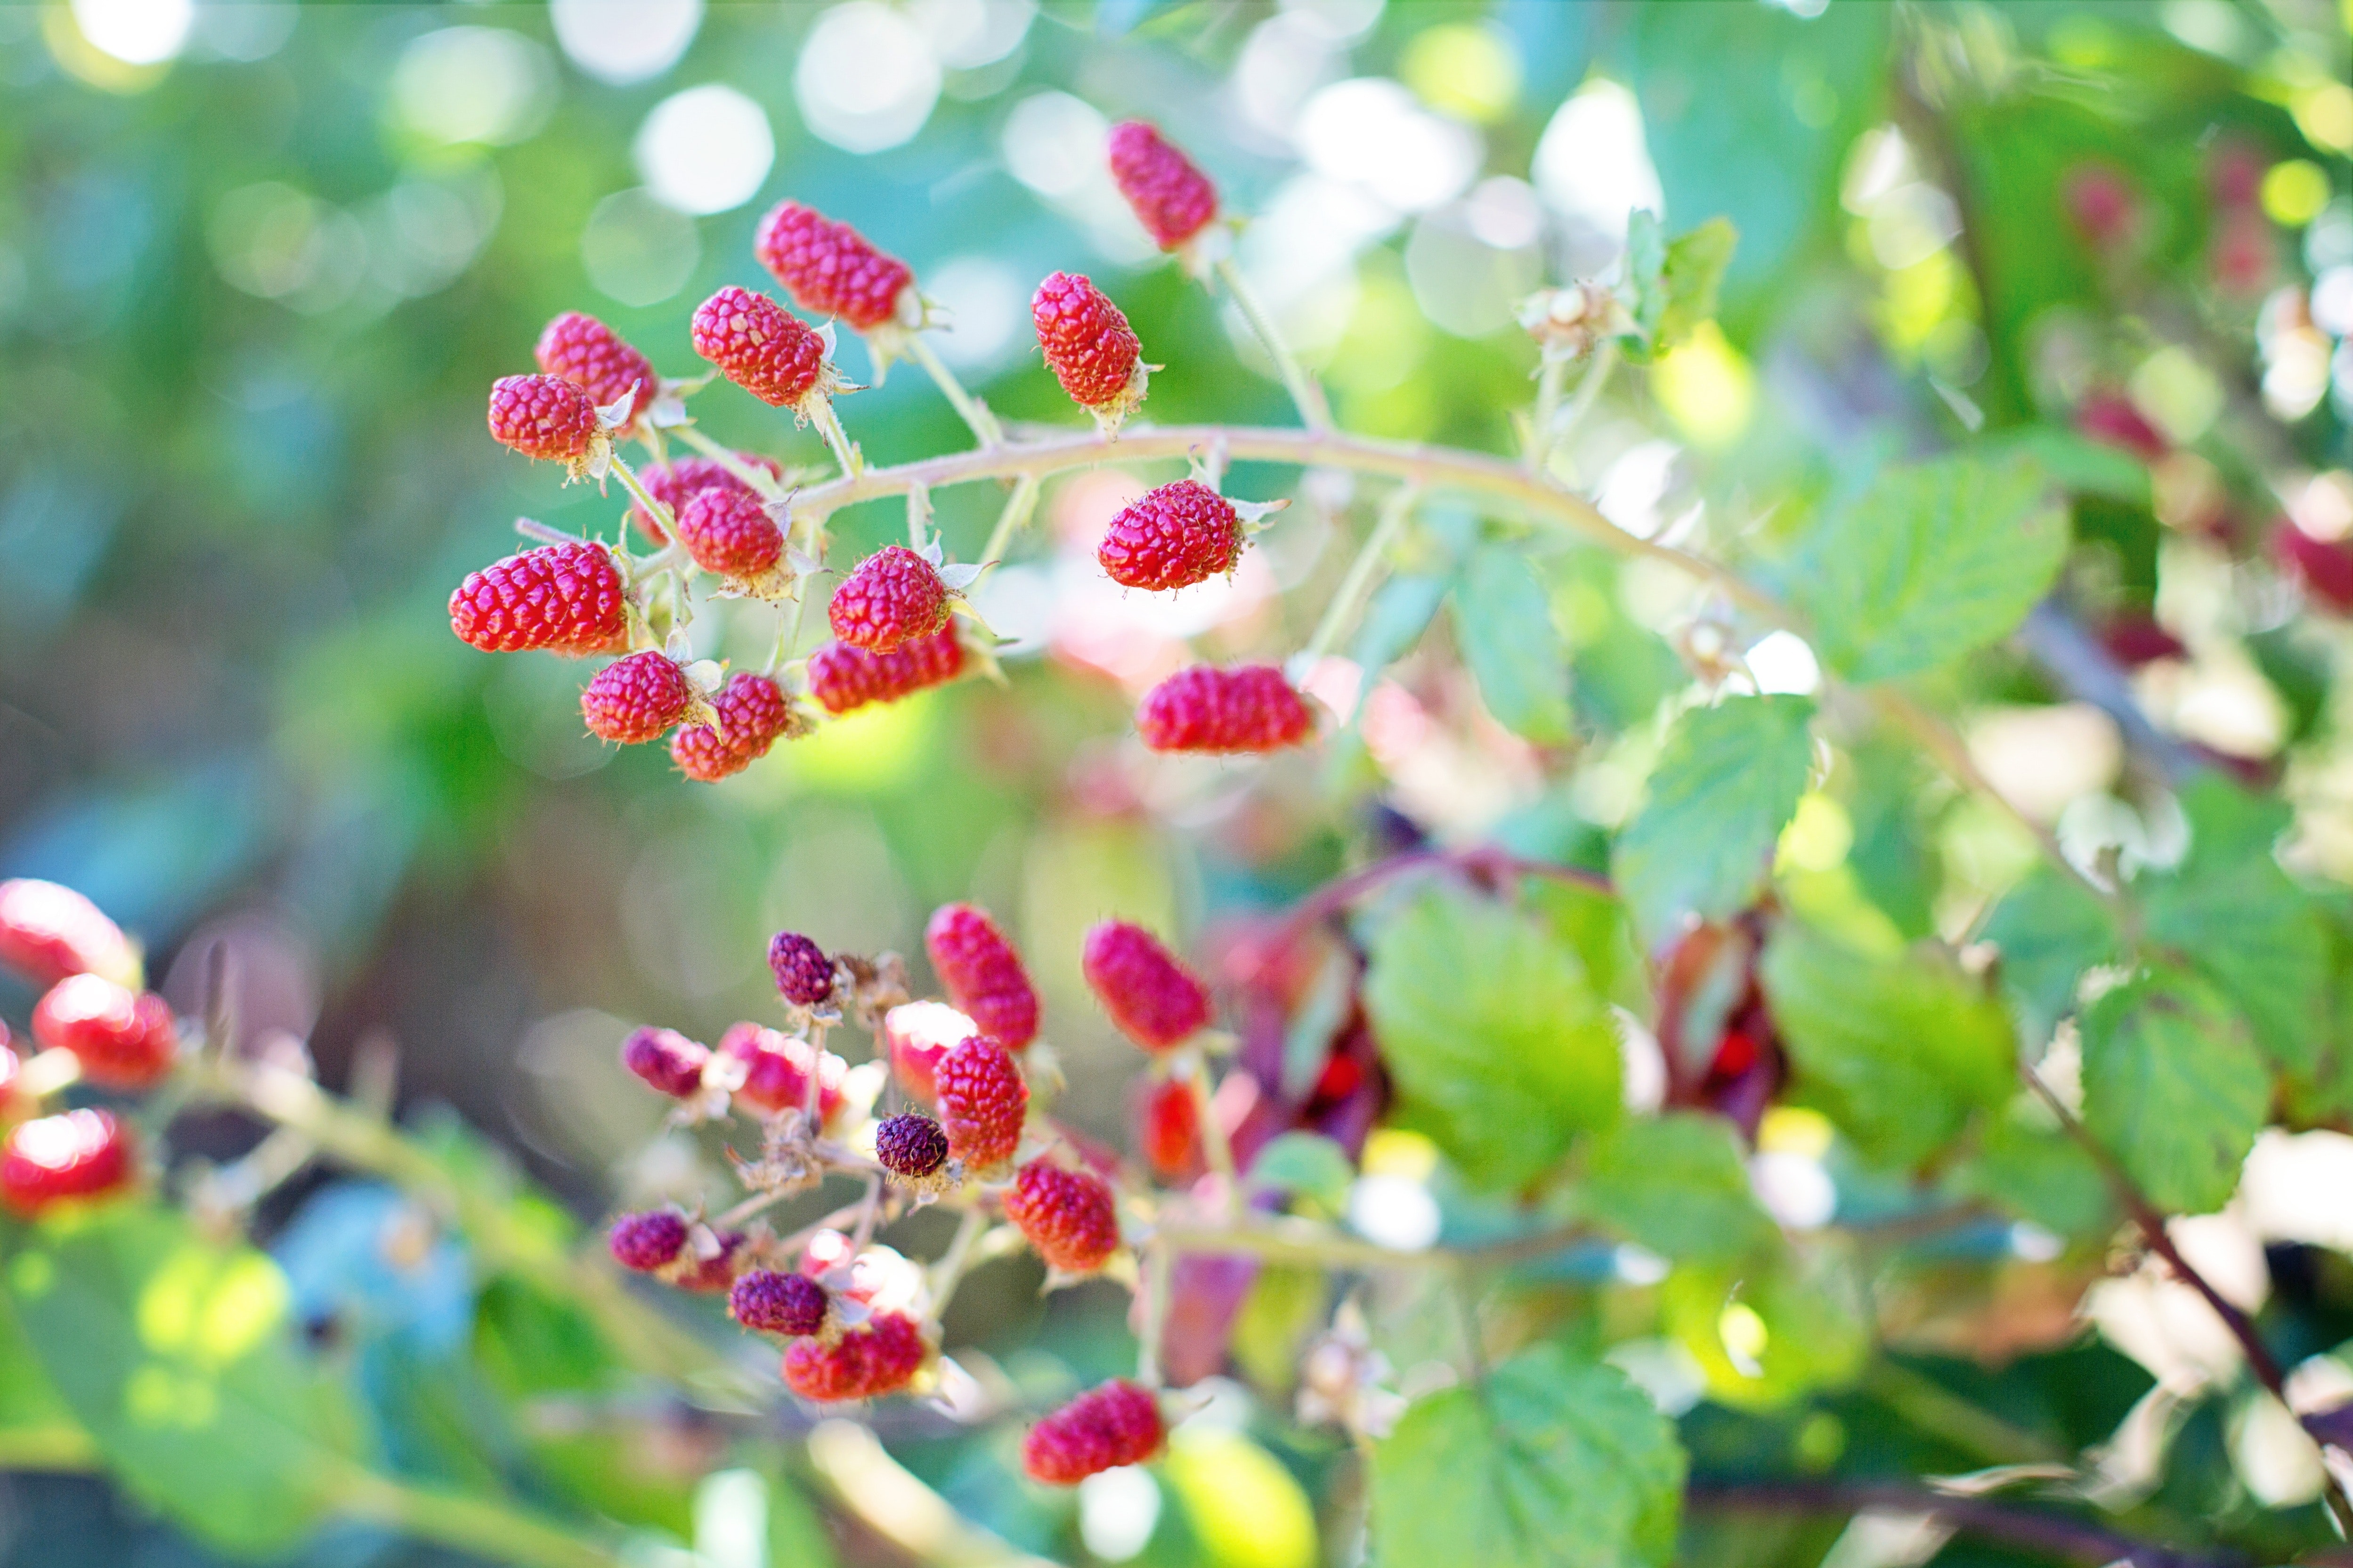 Red raspberries photo